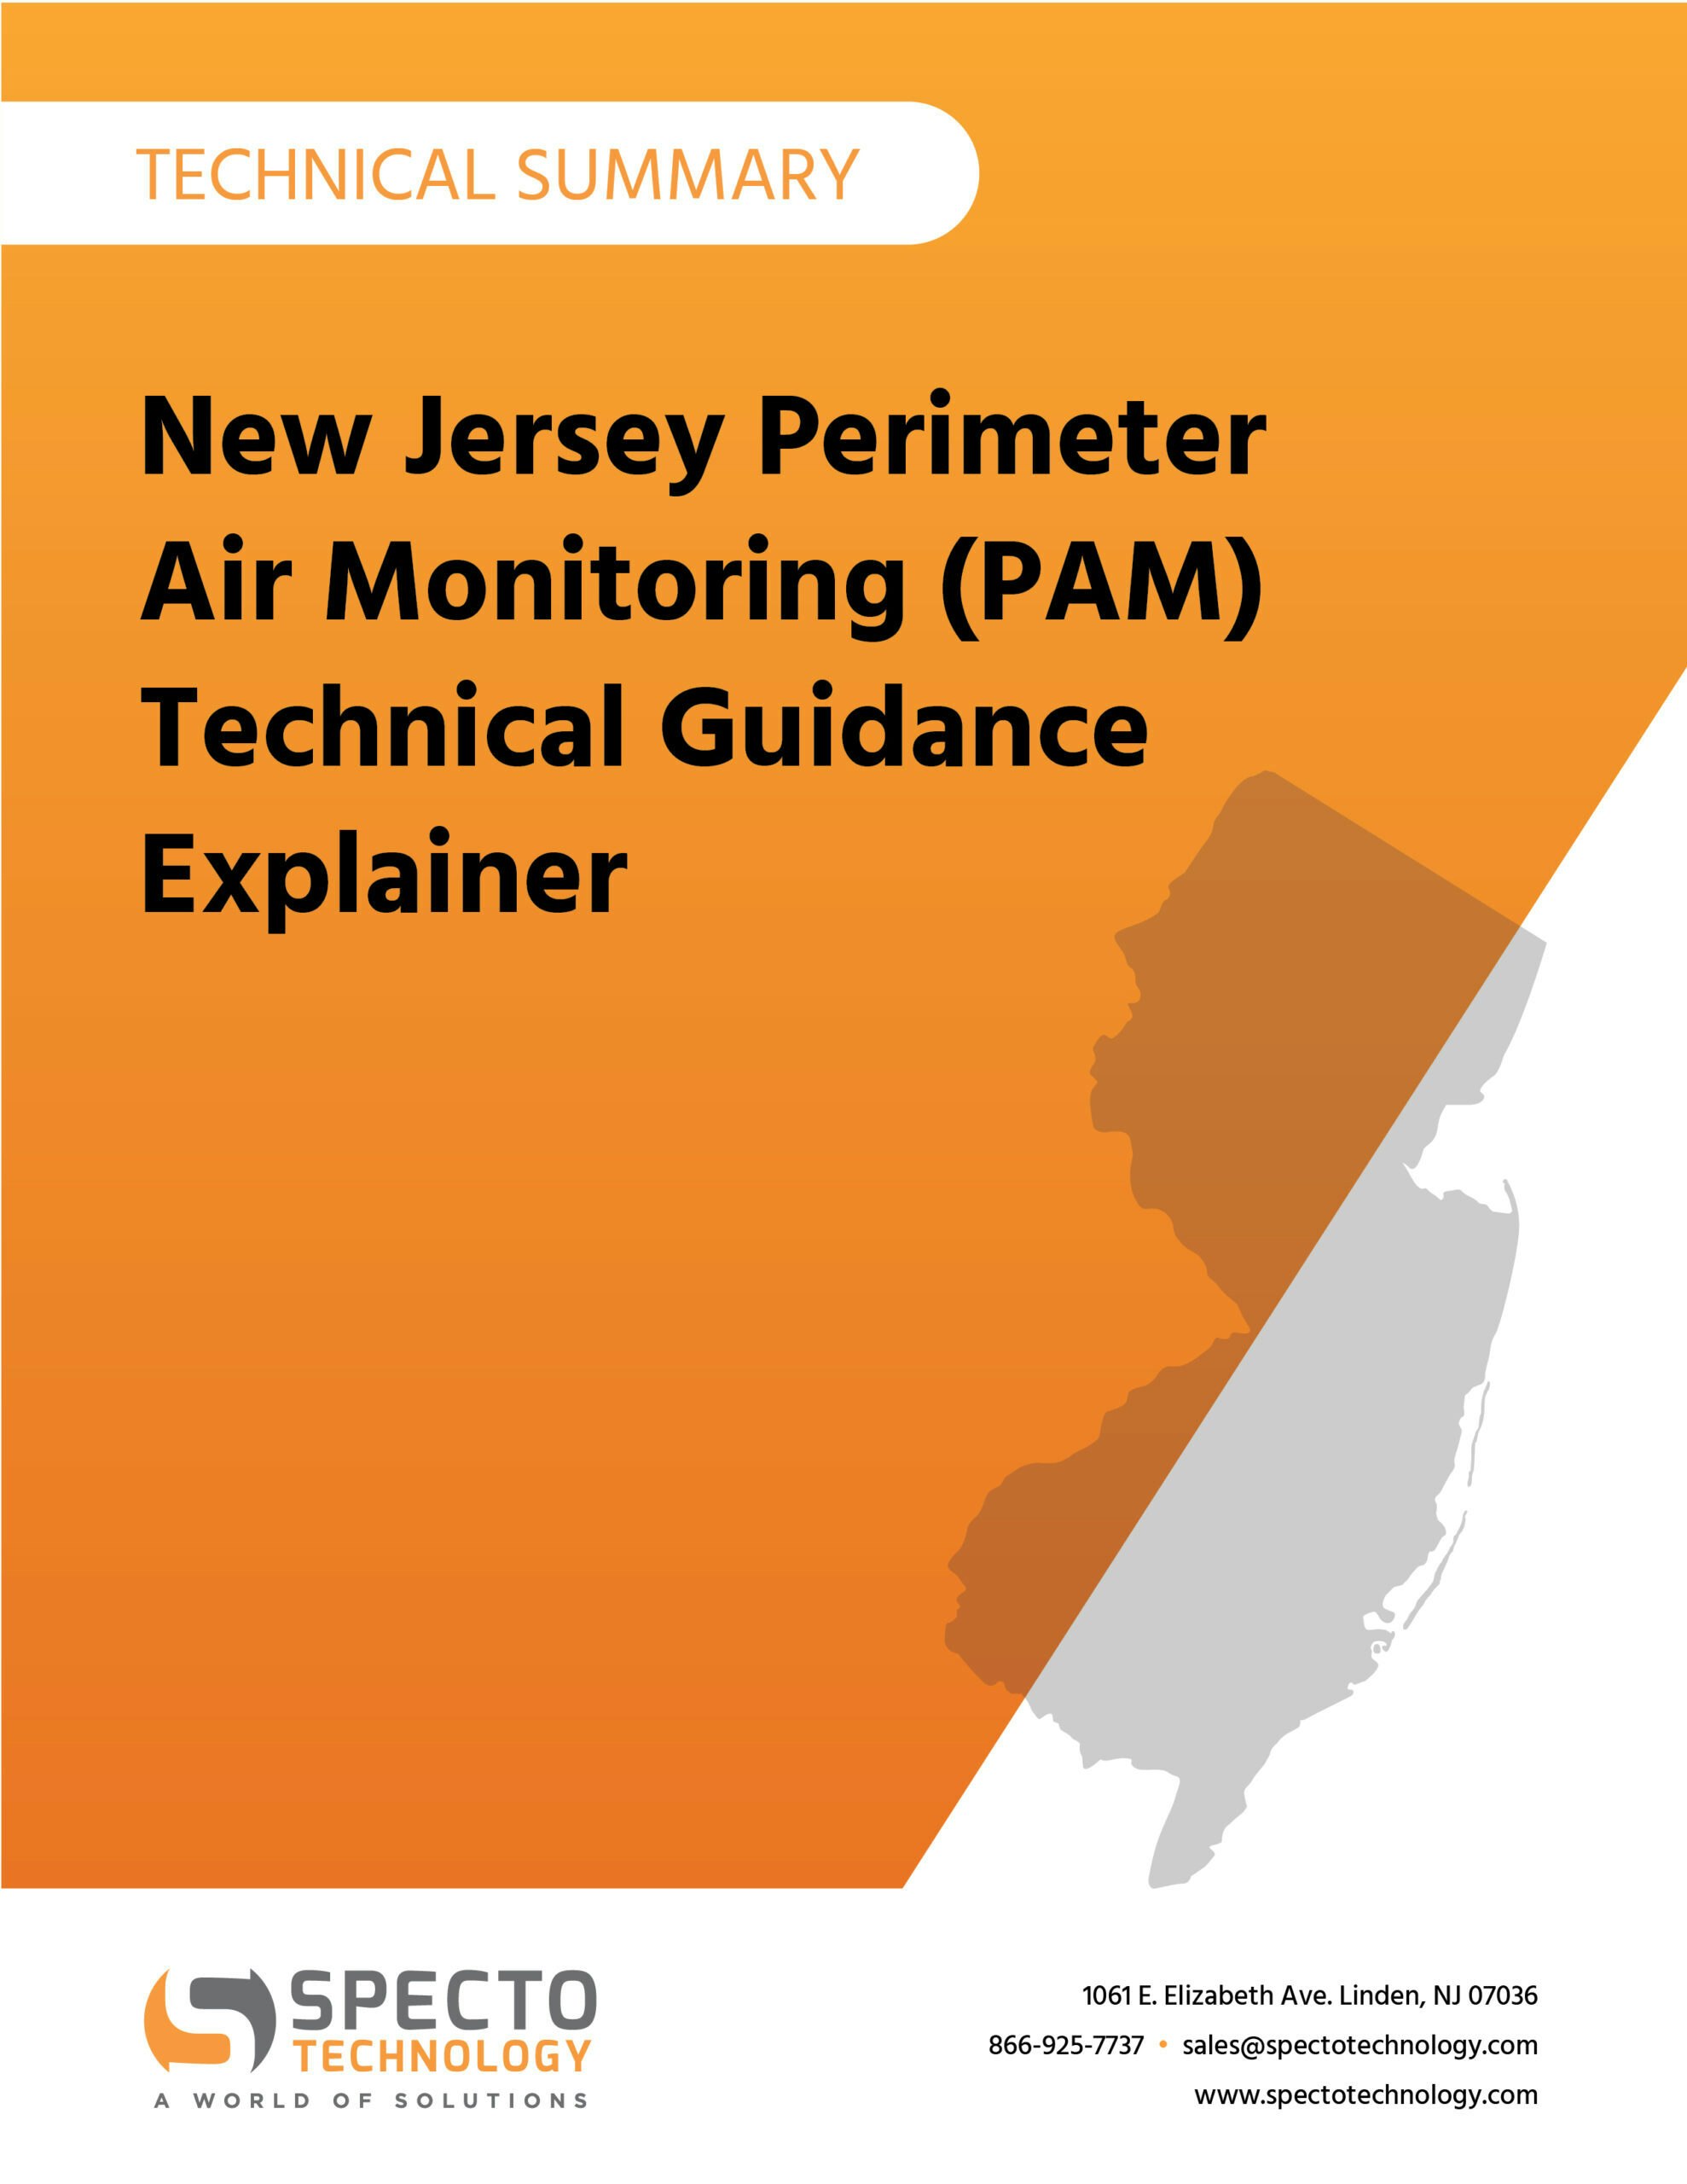 PAM Technical Guidance Explainer